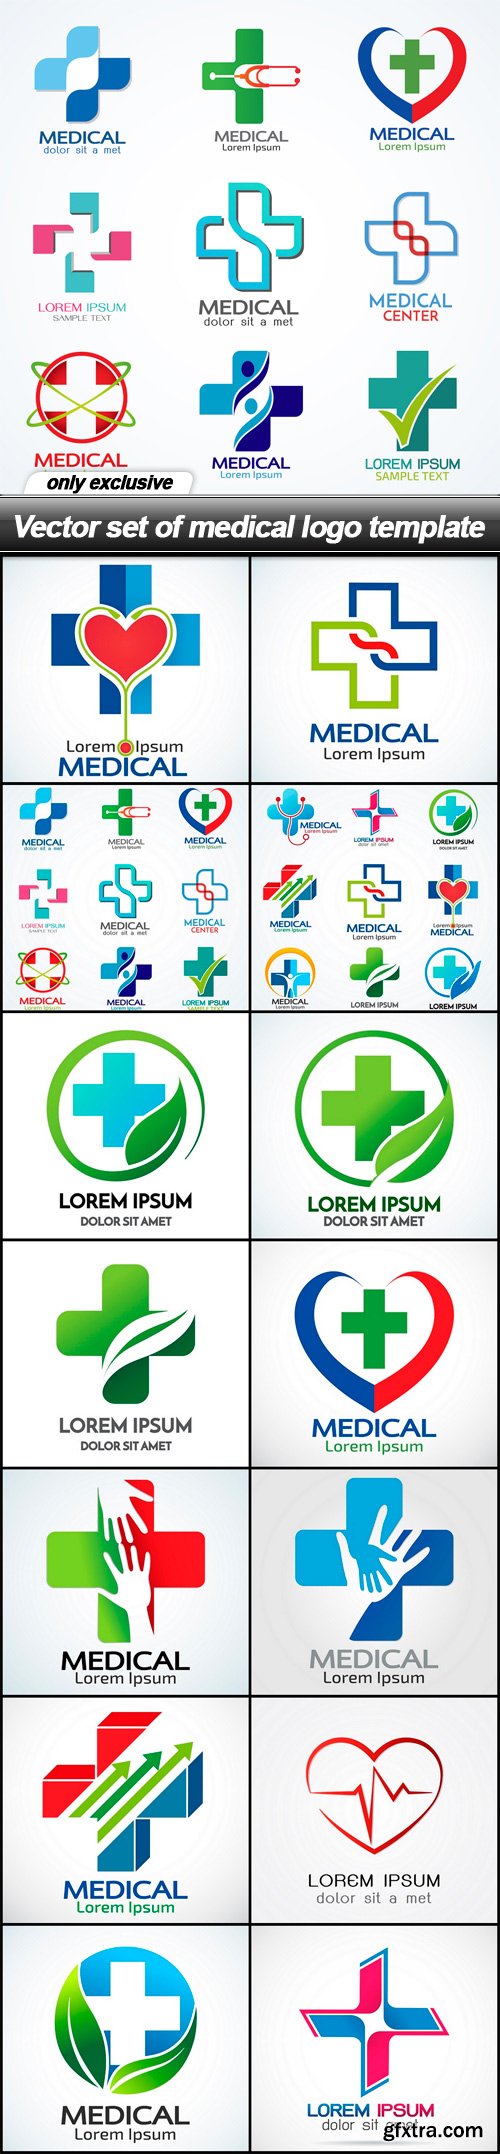 Vector set of medical logo template - 14 EPS